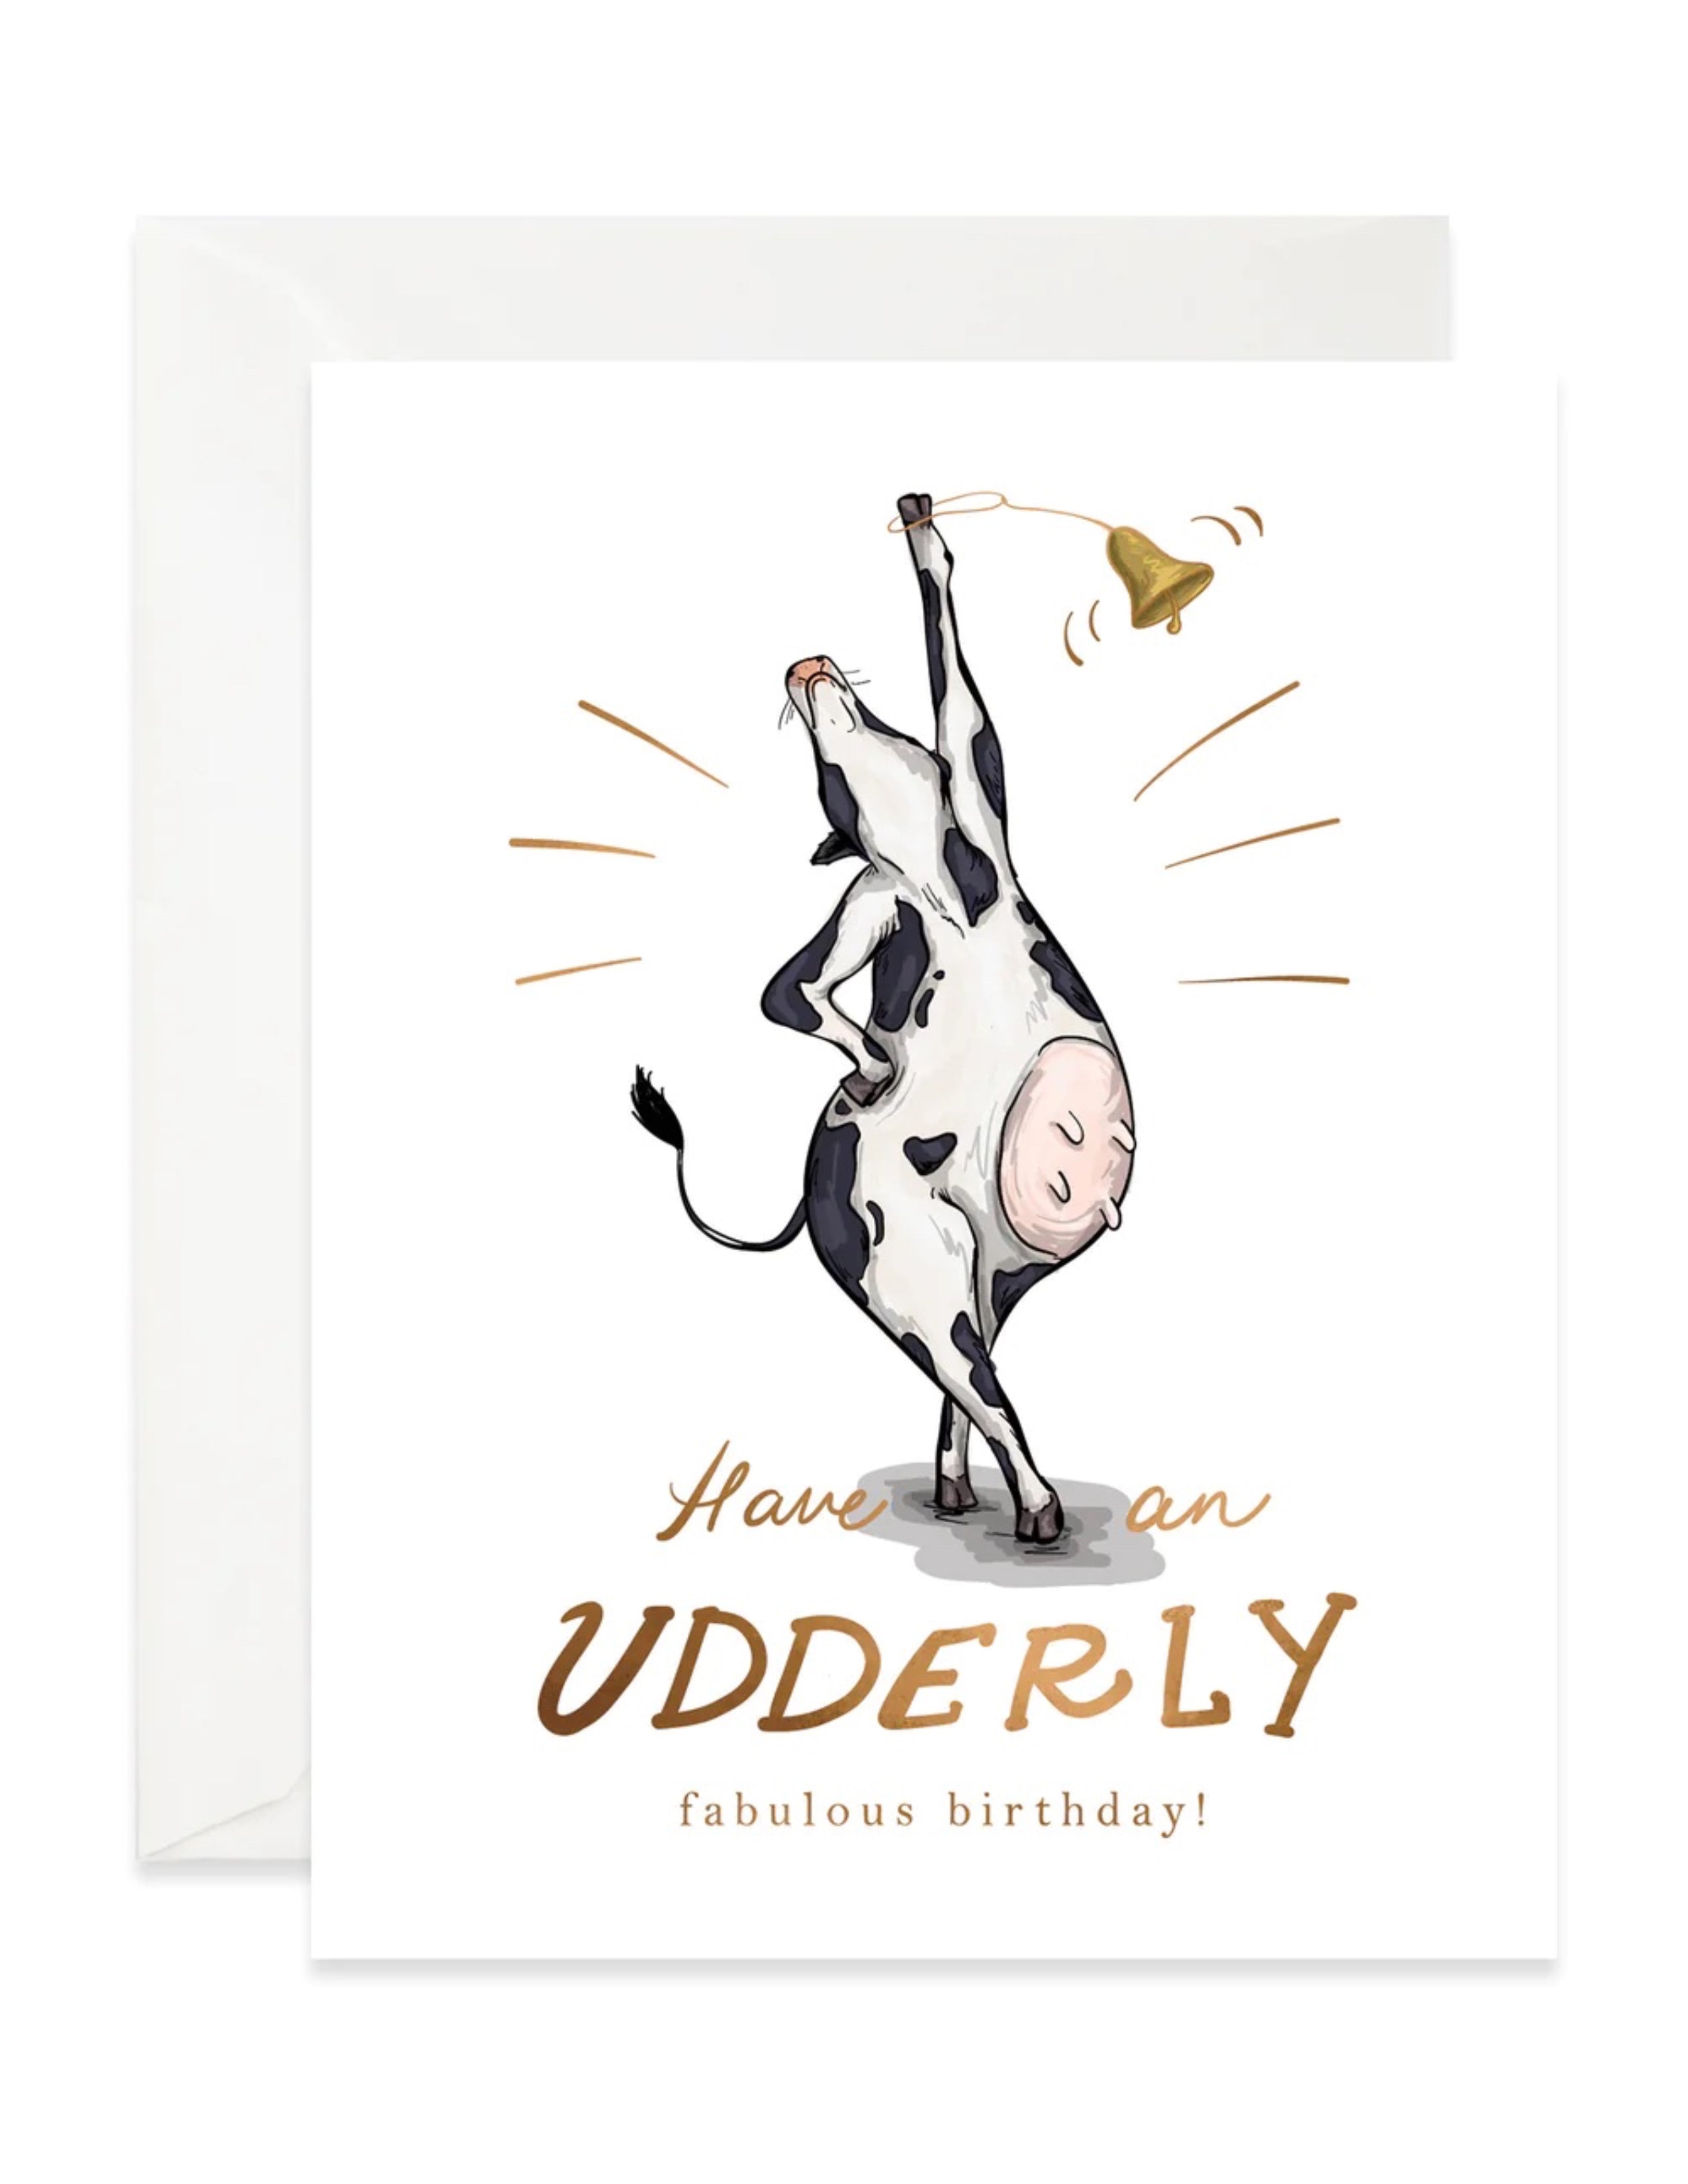 Udderly Fabulous Birthday Card